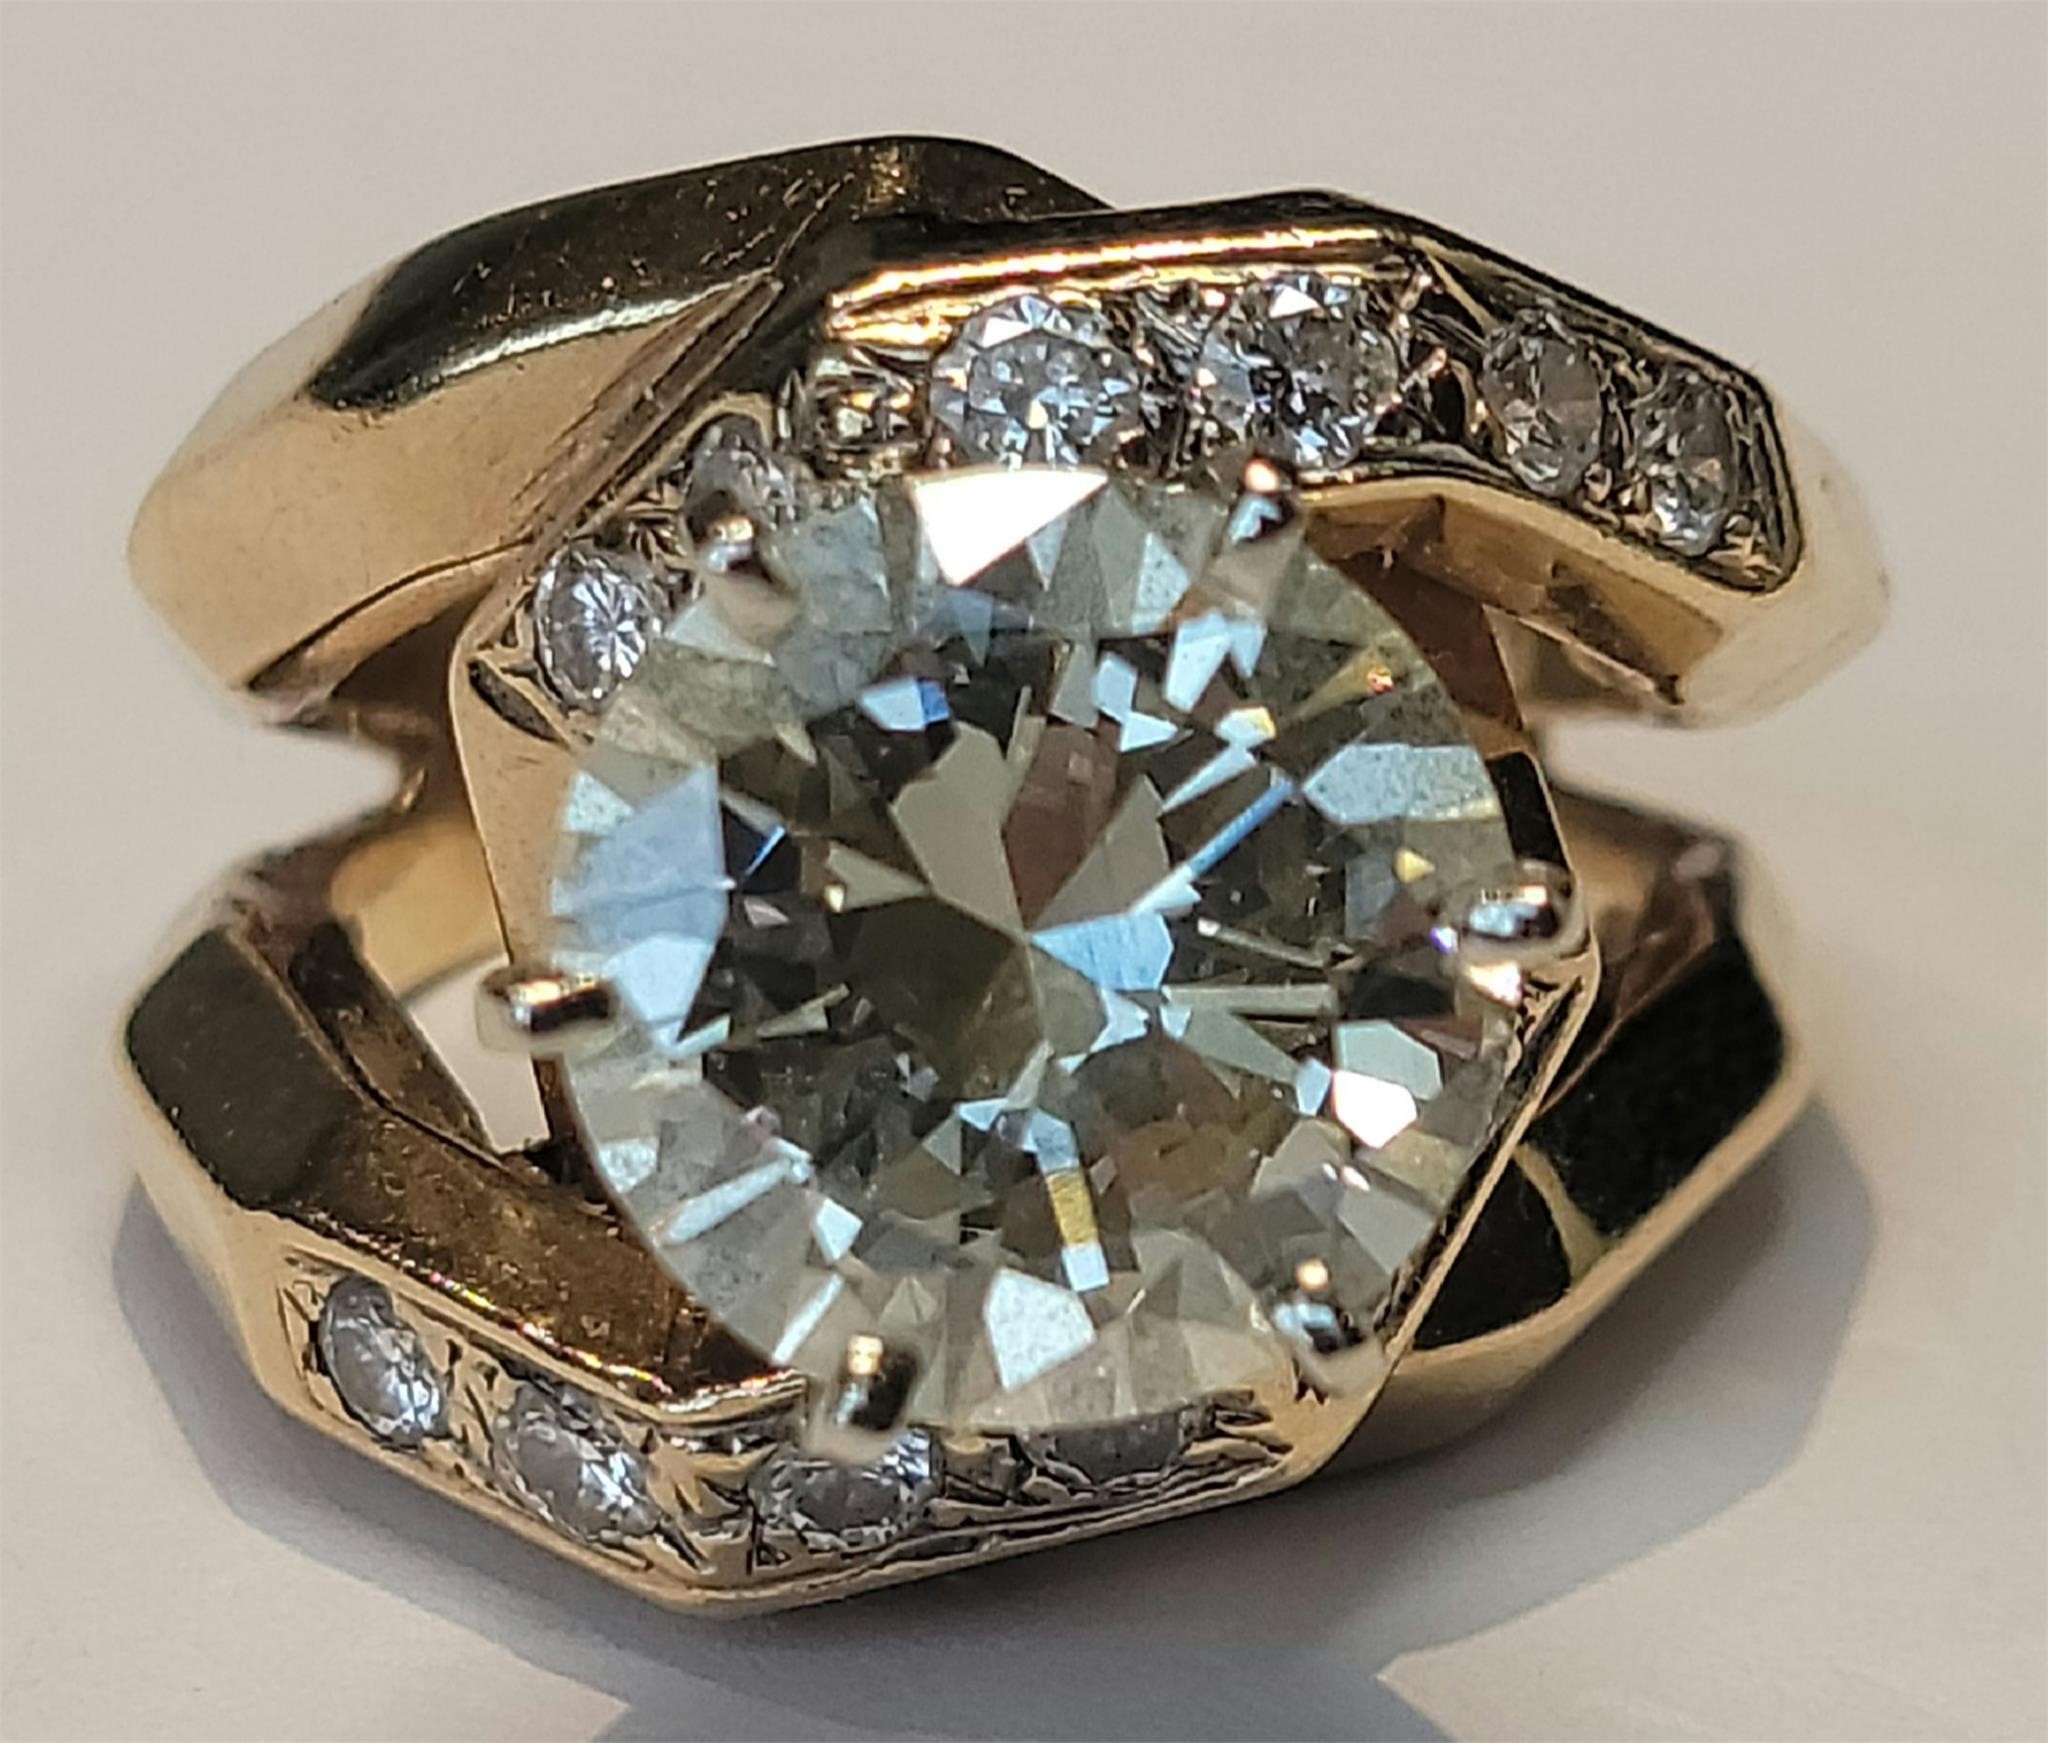 Diamond ring 4.55 carats in 14K yellow gold